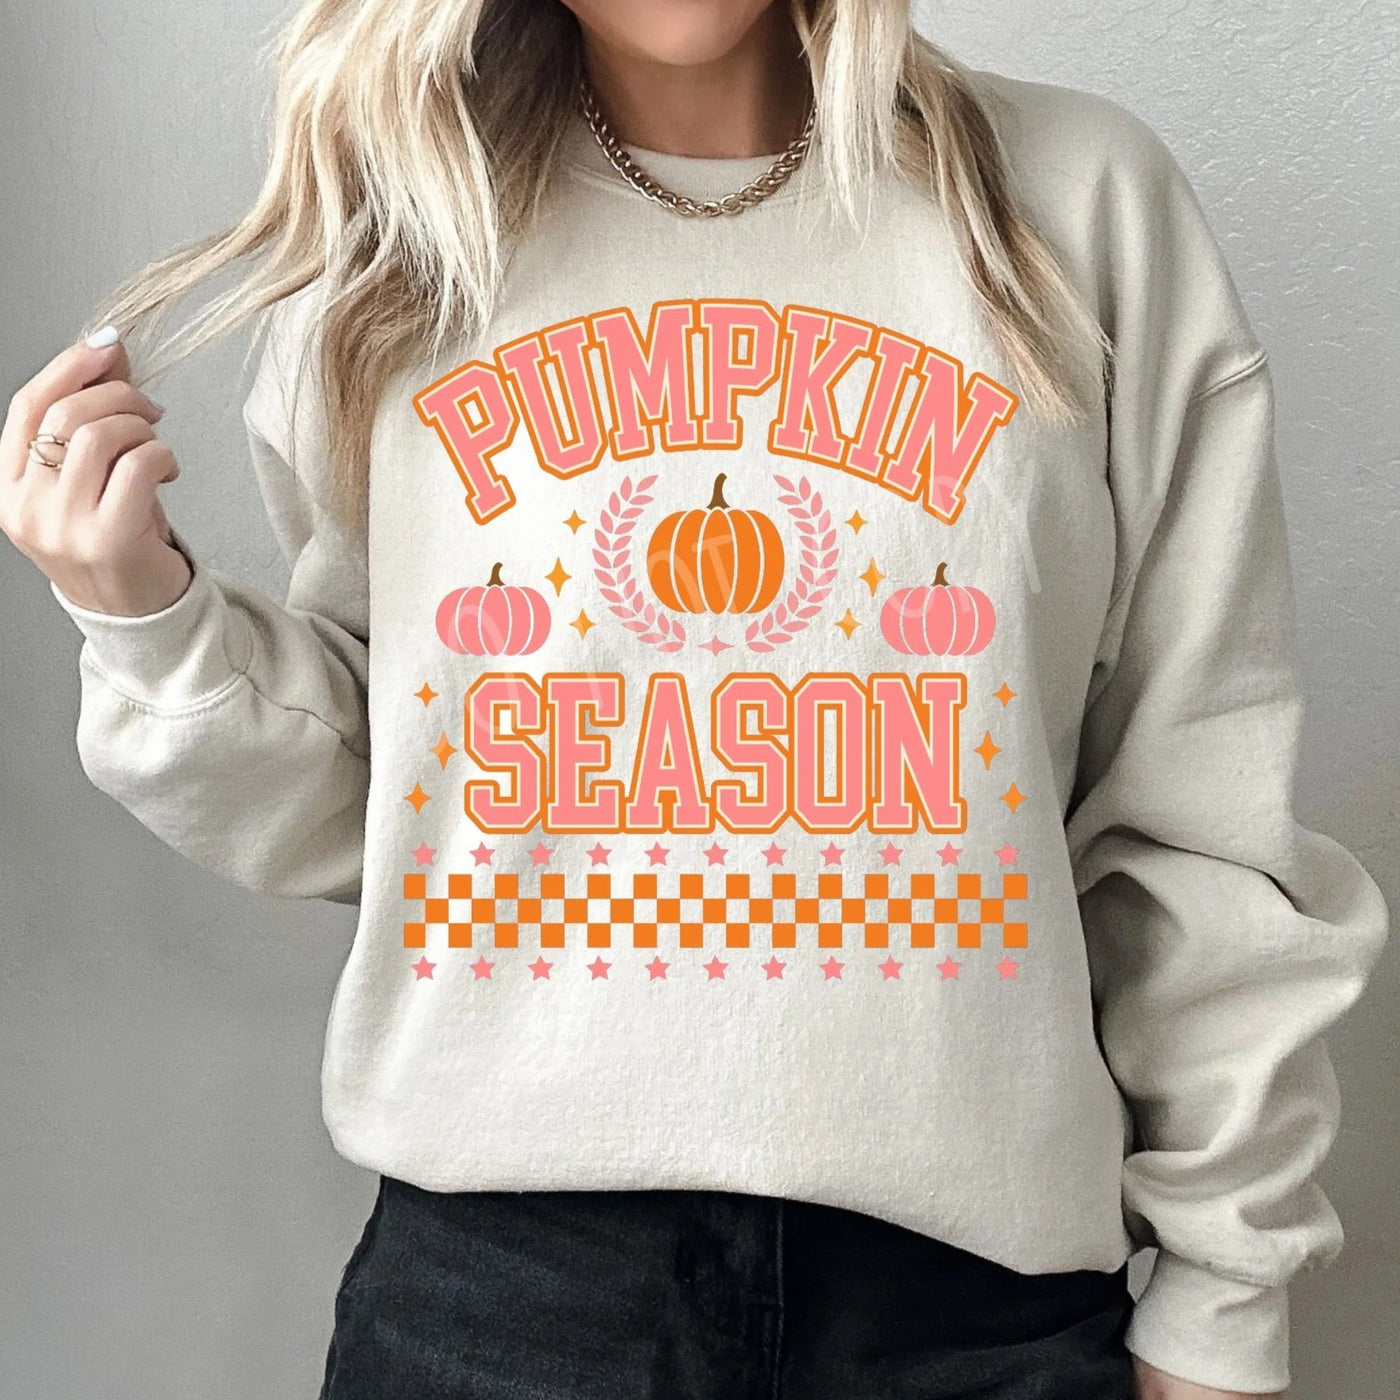 "Pumpkin Season" Sweatshirt or T-shirt (shown on "Sand")